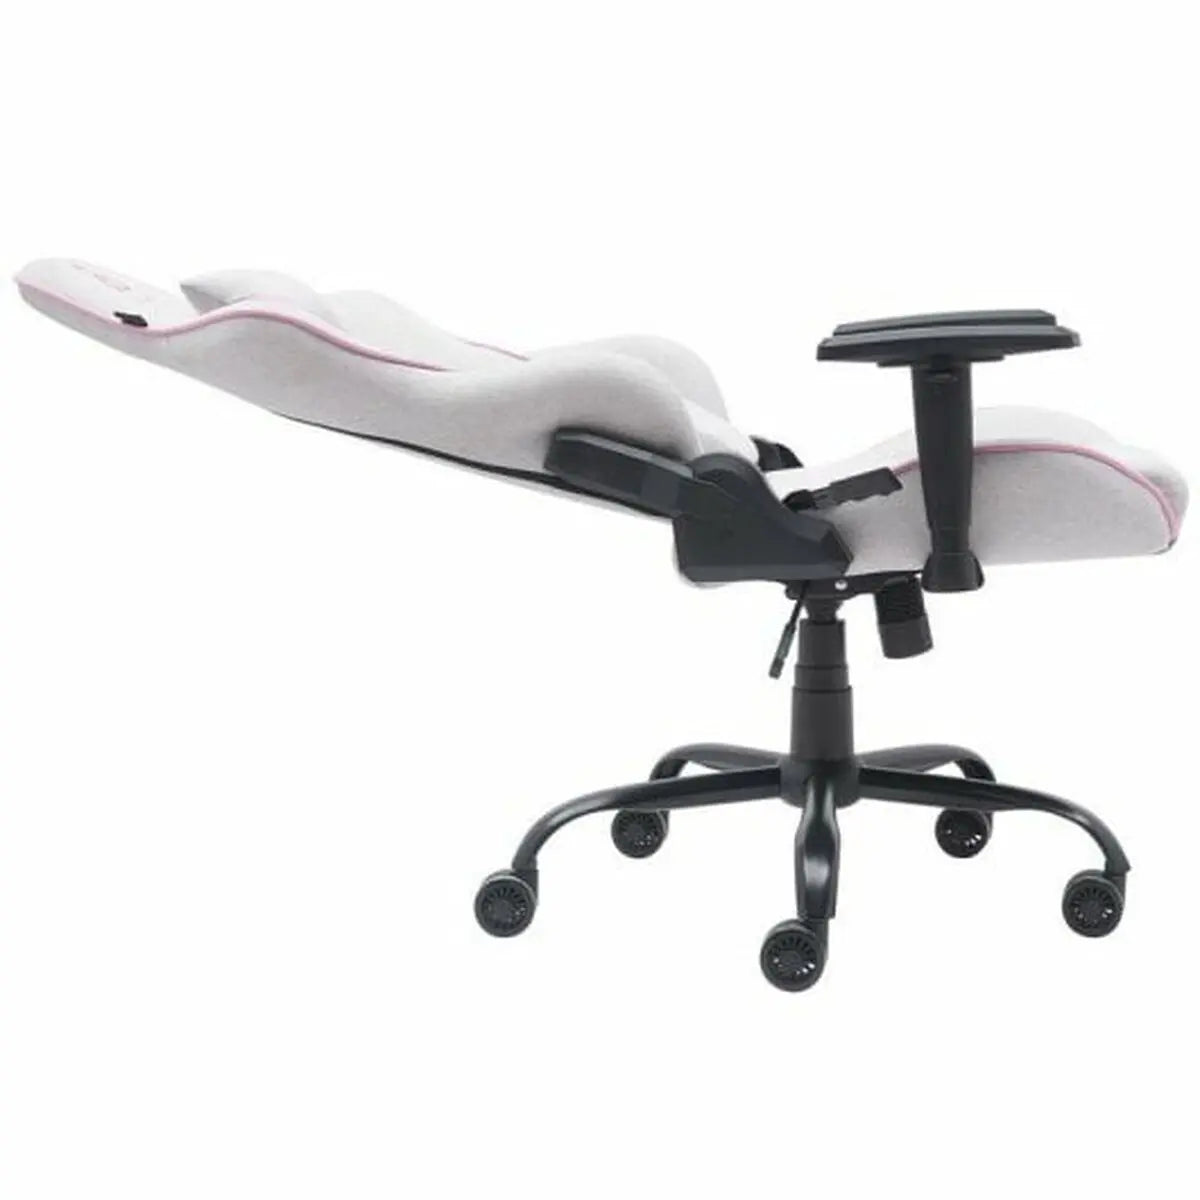 Gaming Chair Newskill Kitsune V2 Pink - IGSI Europe Ltd